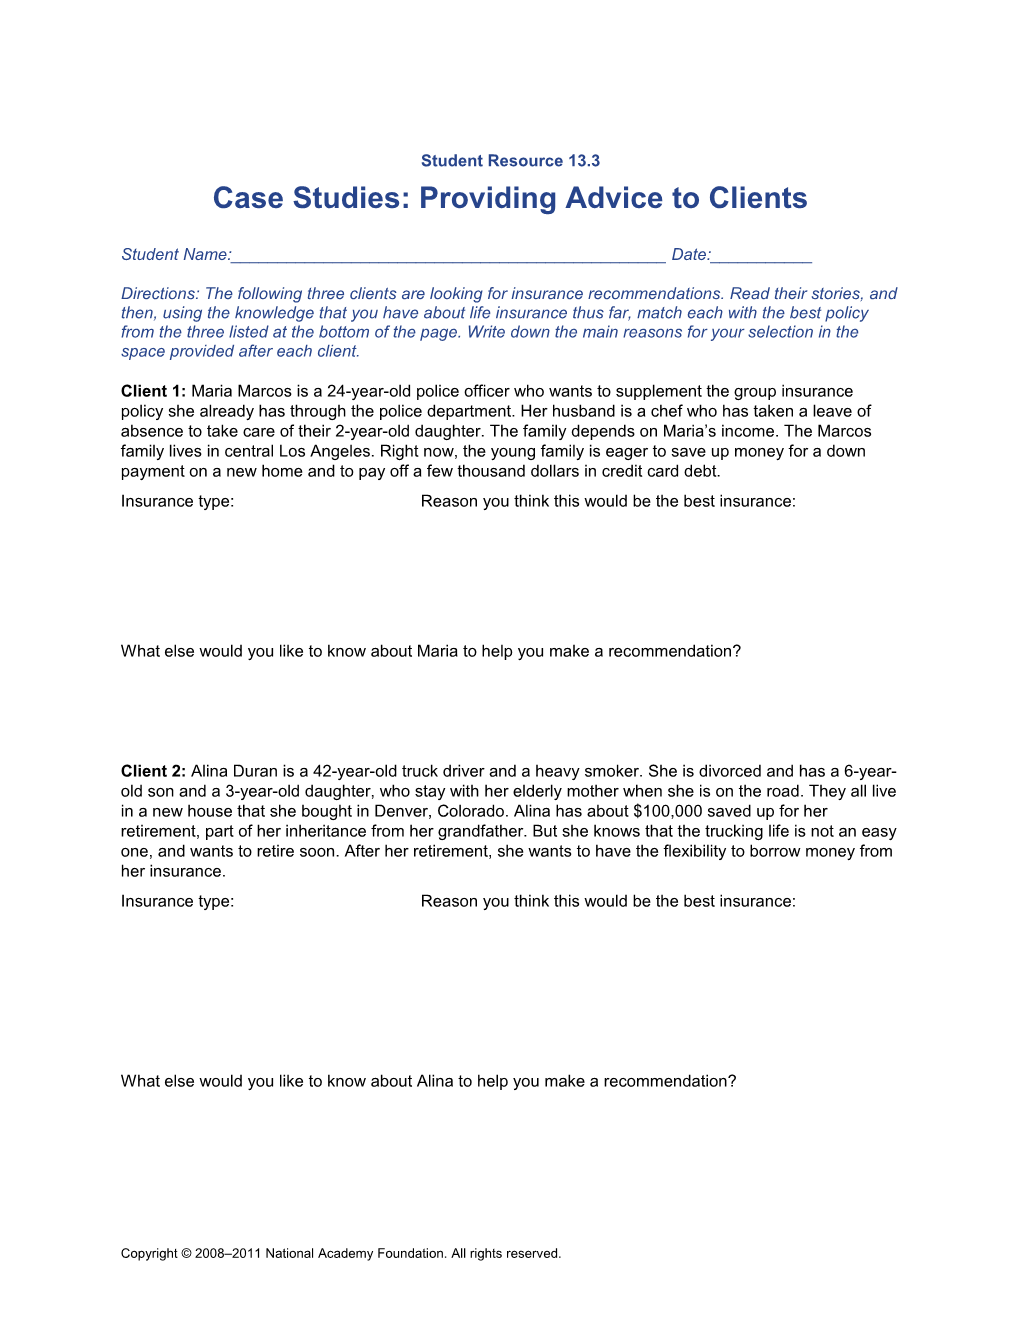 Case Studies: Providing Advice to Clients